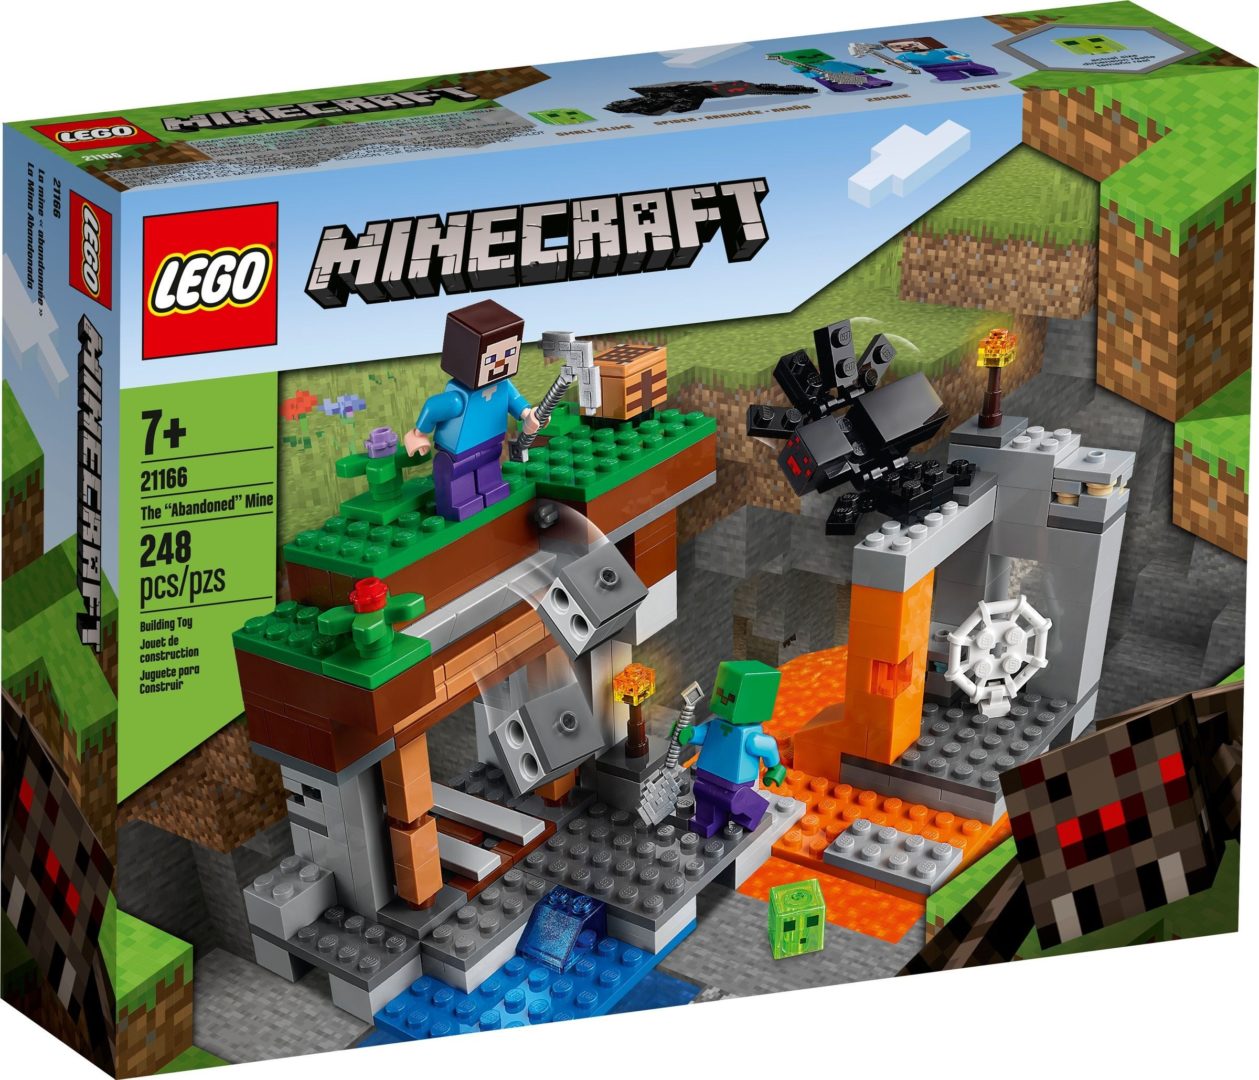 LEGO Minecraft 21166 "Hylätty" Kaivos, Lego